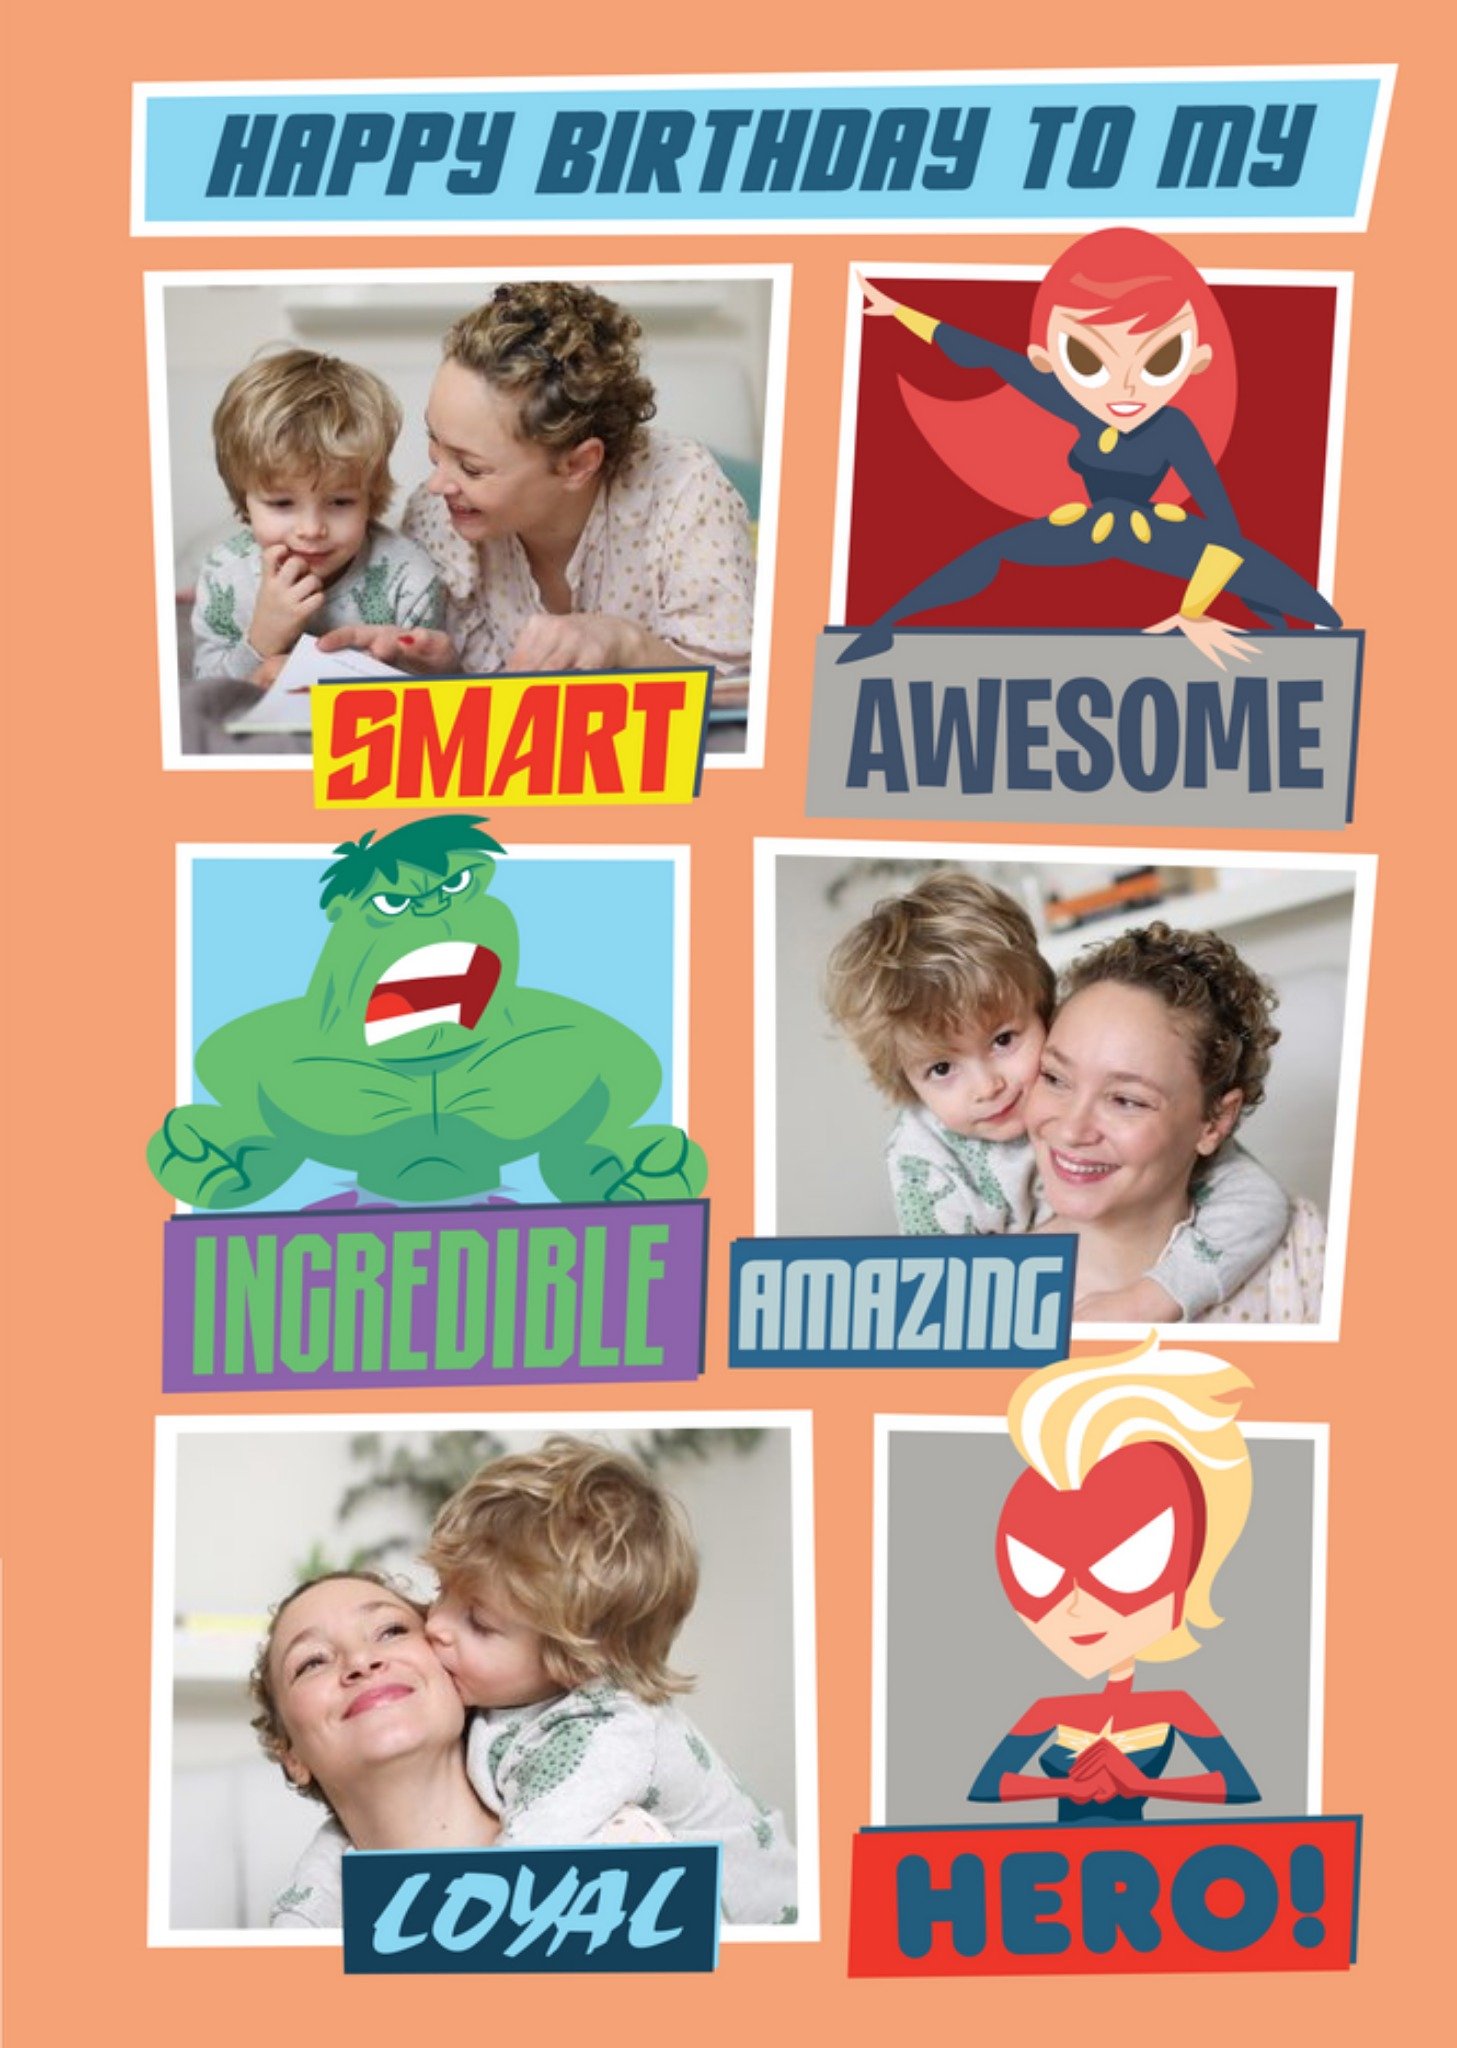 Disney Marvel Comics Superheroes To A Loyal Hero Photo Upload Card Ecard